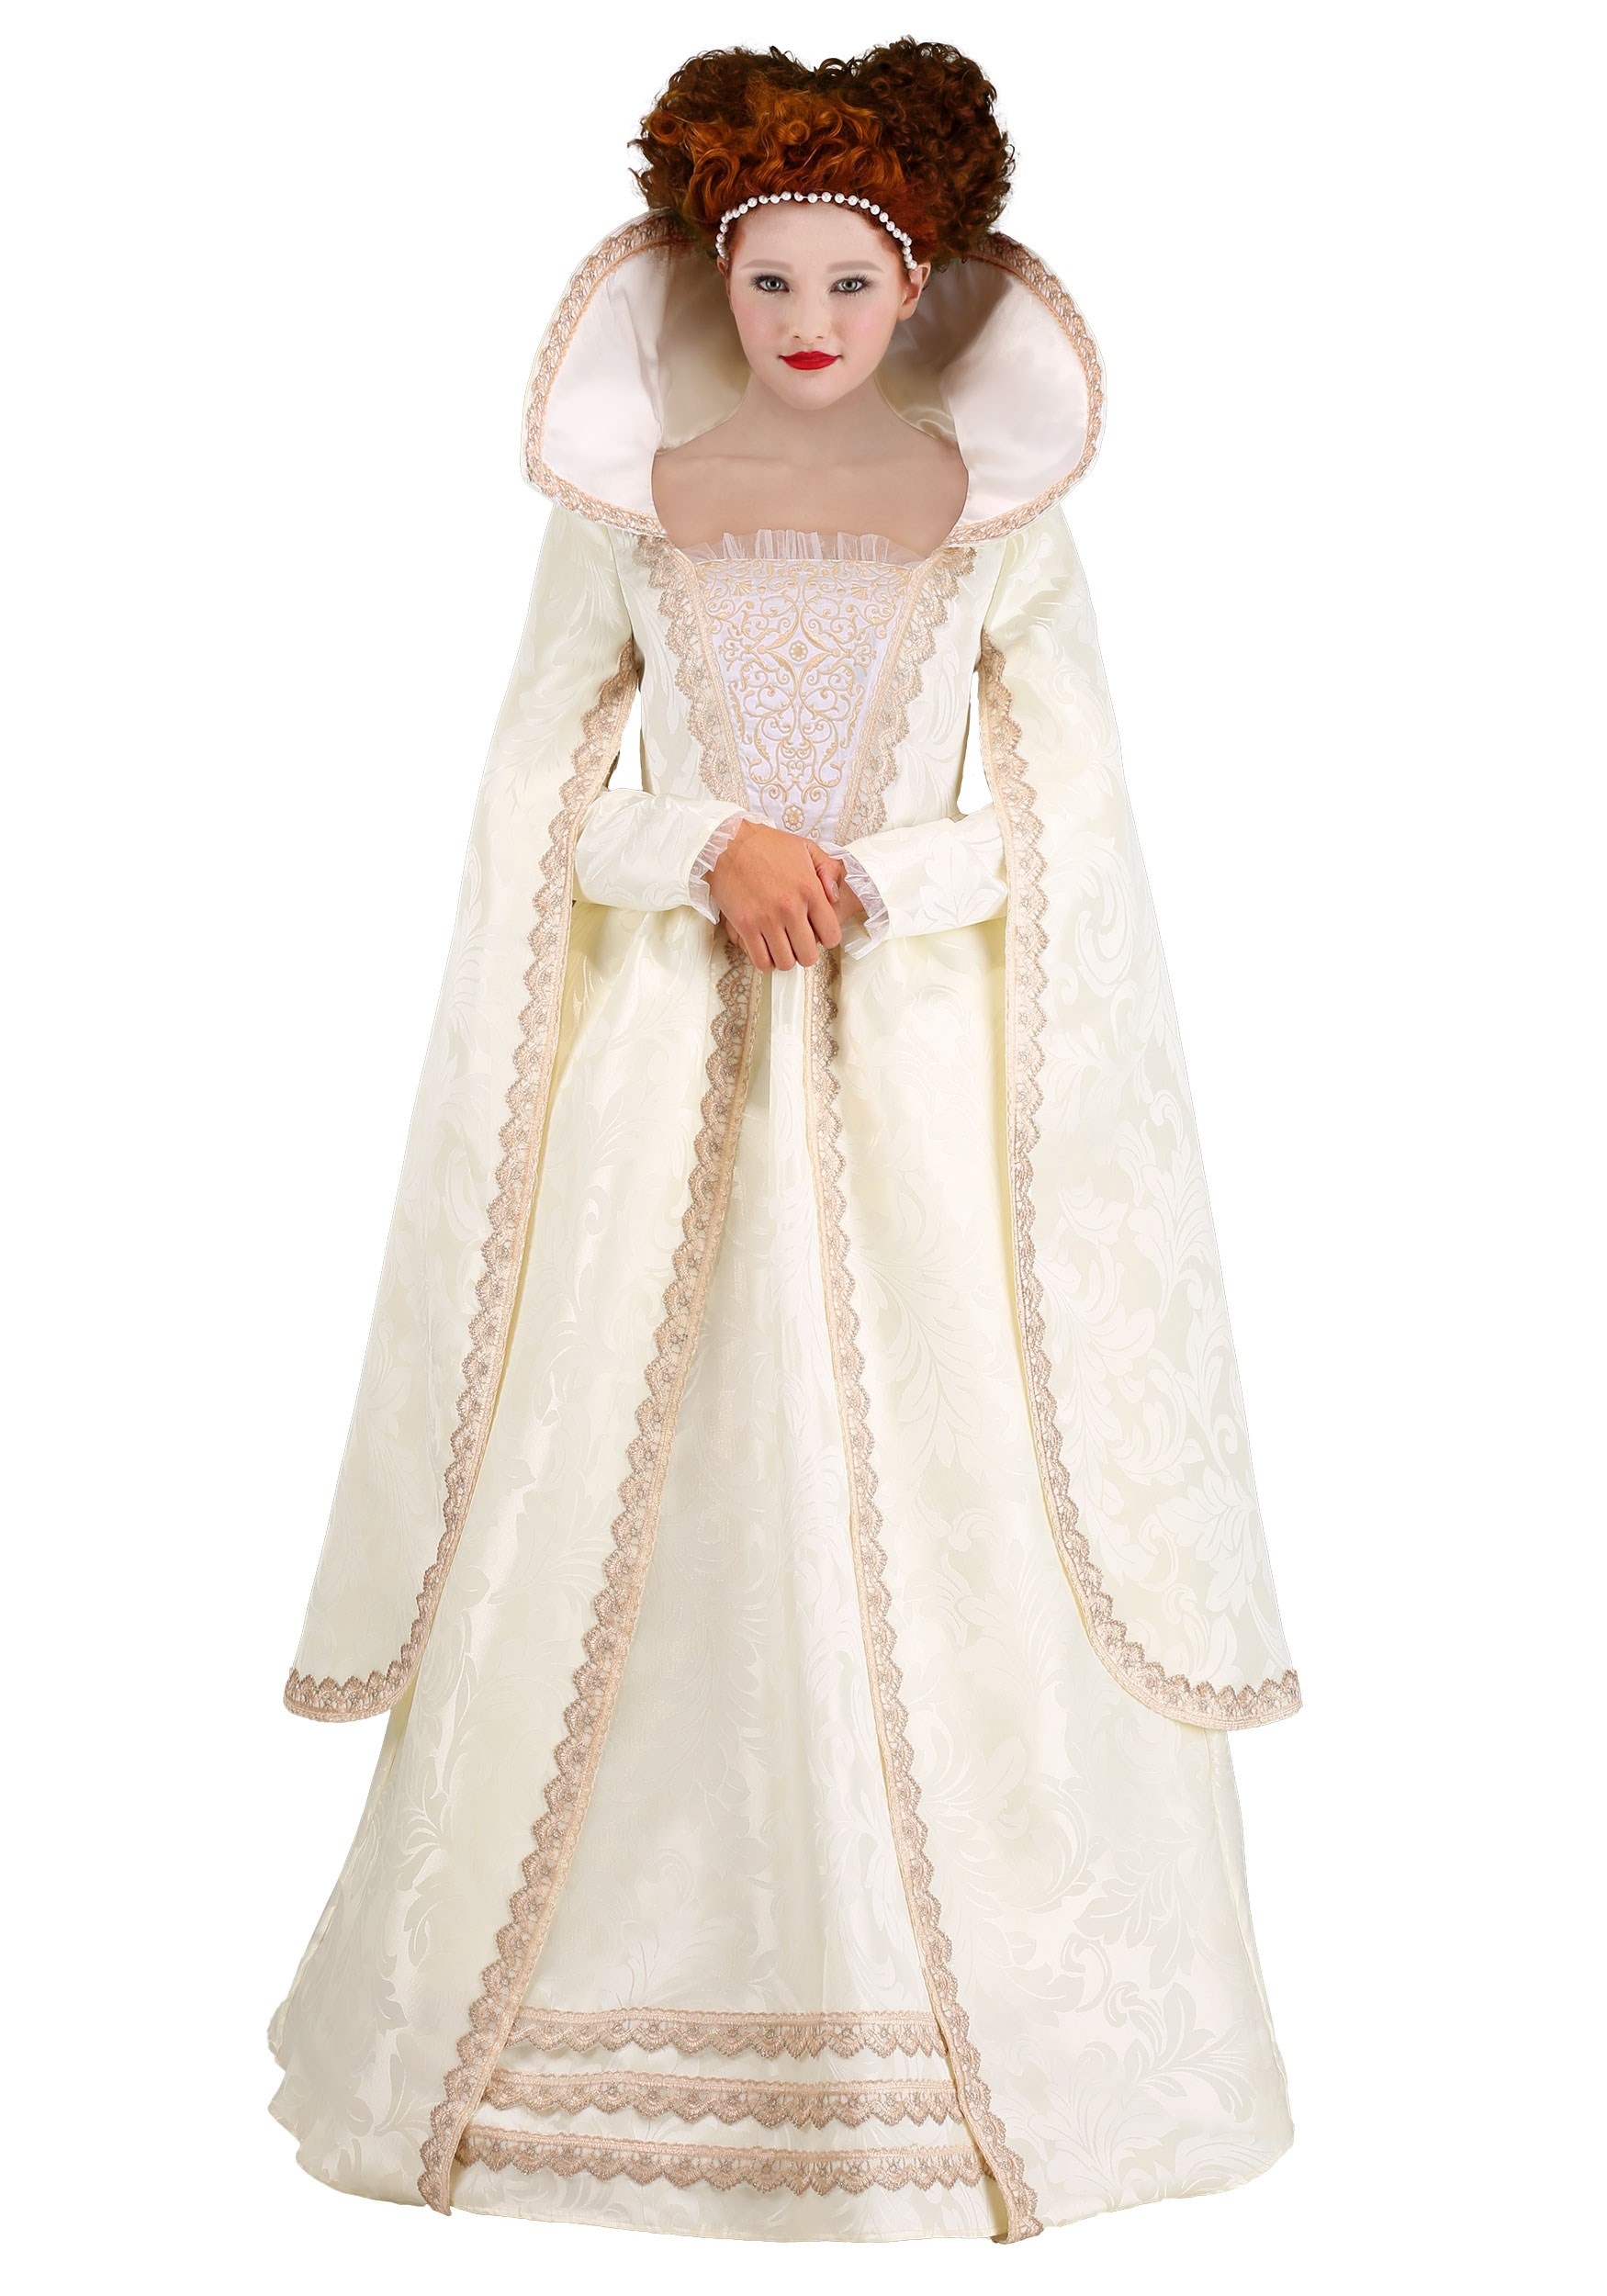 Photos - Fancy Dress FUN Costumes Queen Elizabeth I Women's Costume Orange/White